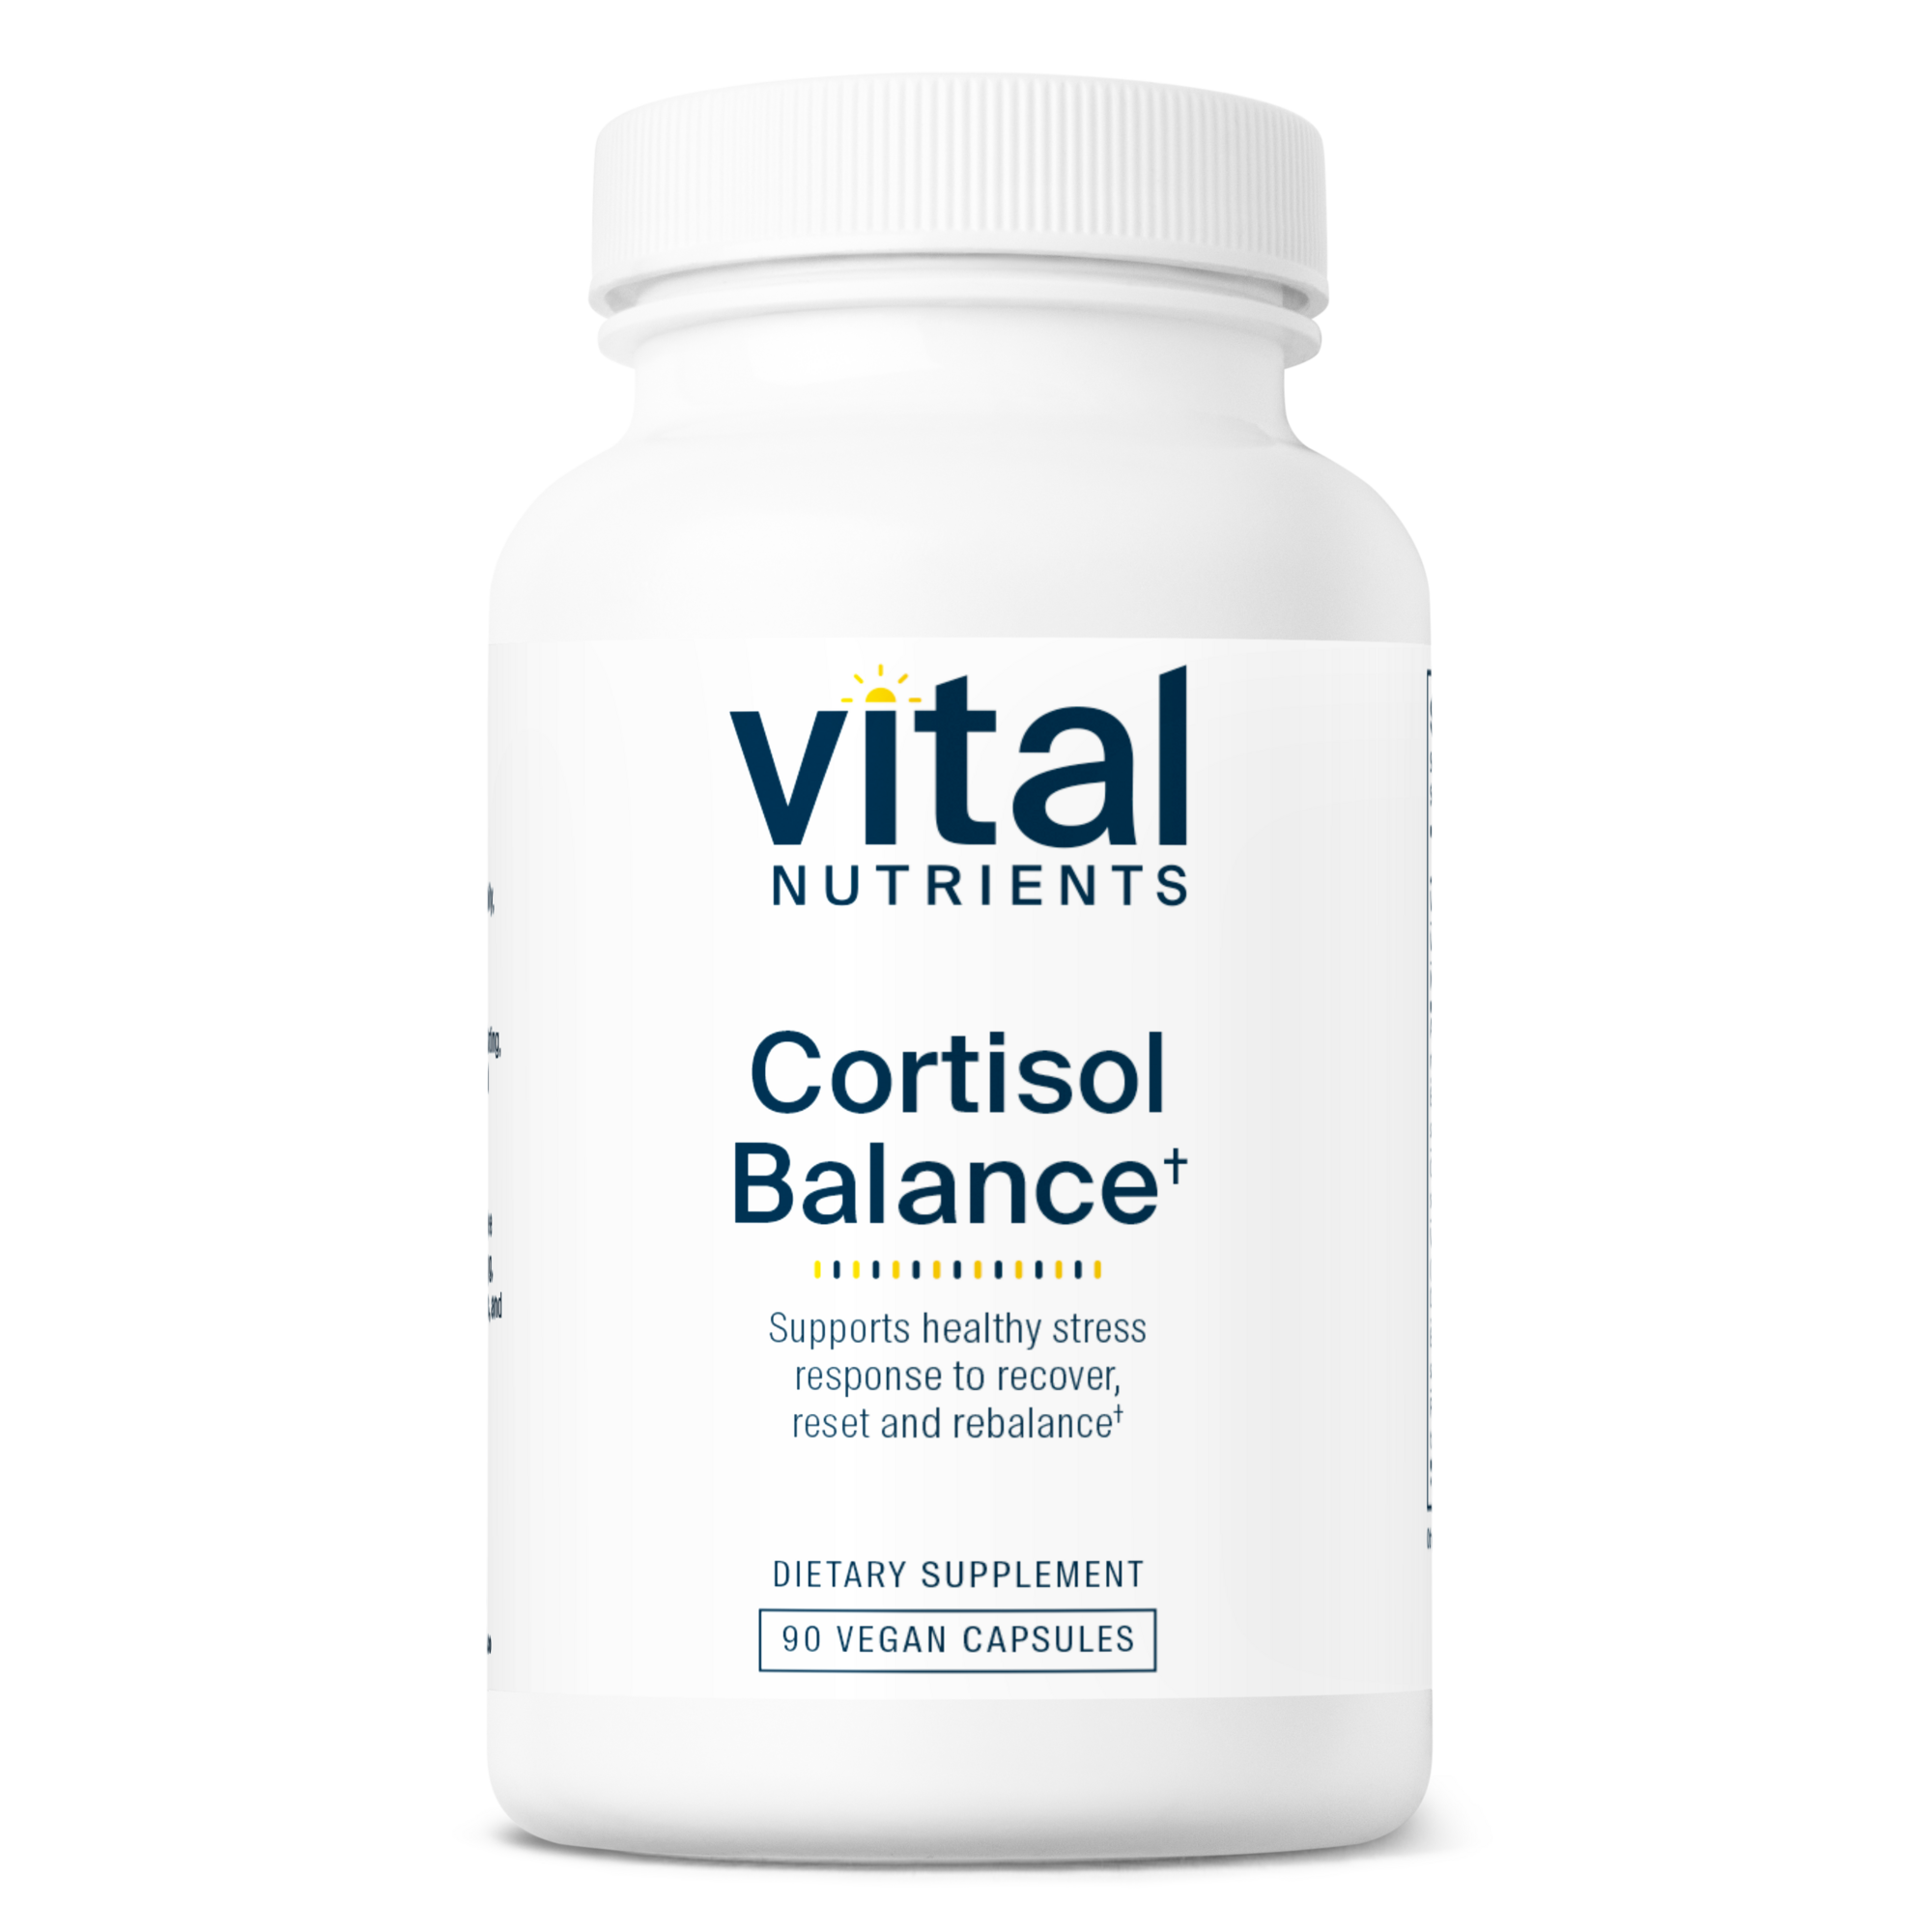 Vital Nutrients Cortisol Balance 90 ct bottle